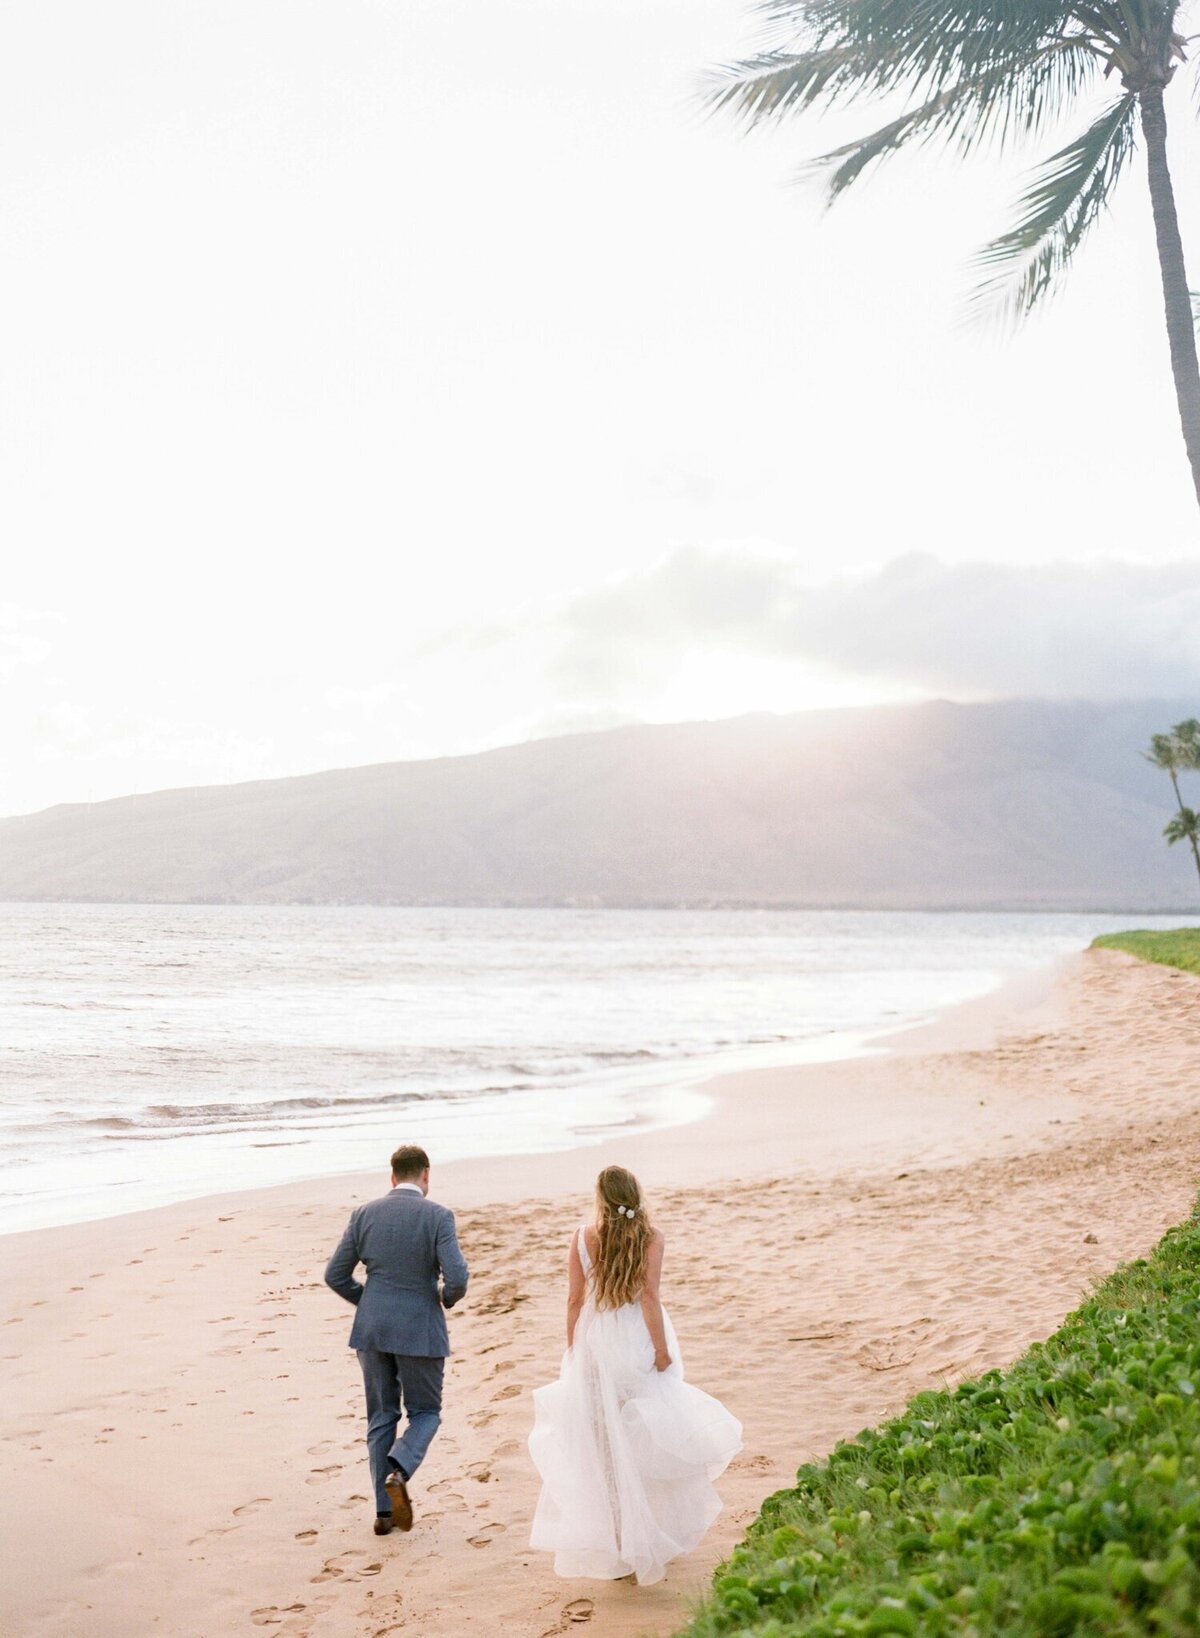 Amy + Andrew | Hawaii Wedding & Lifestyle Photography | Ashley Goodwin Photography